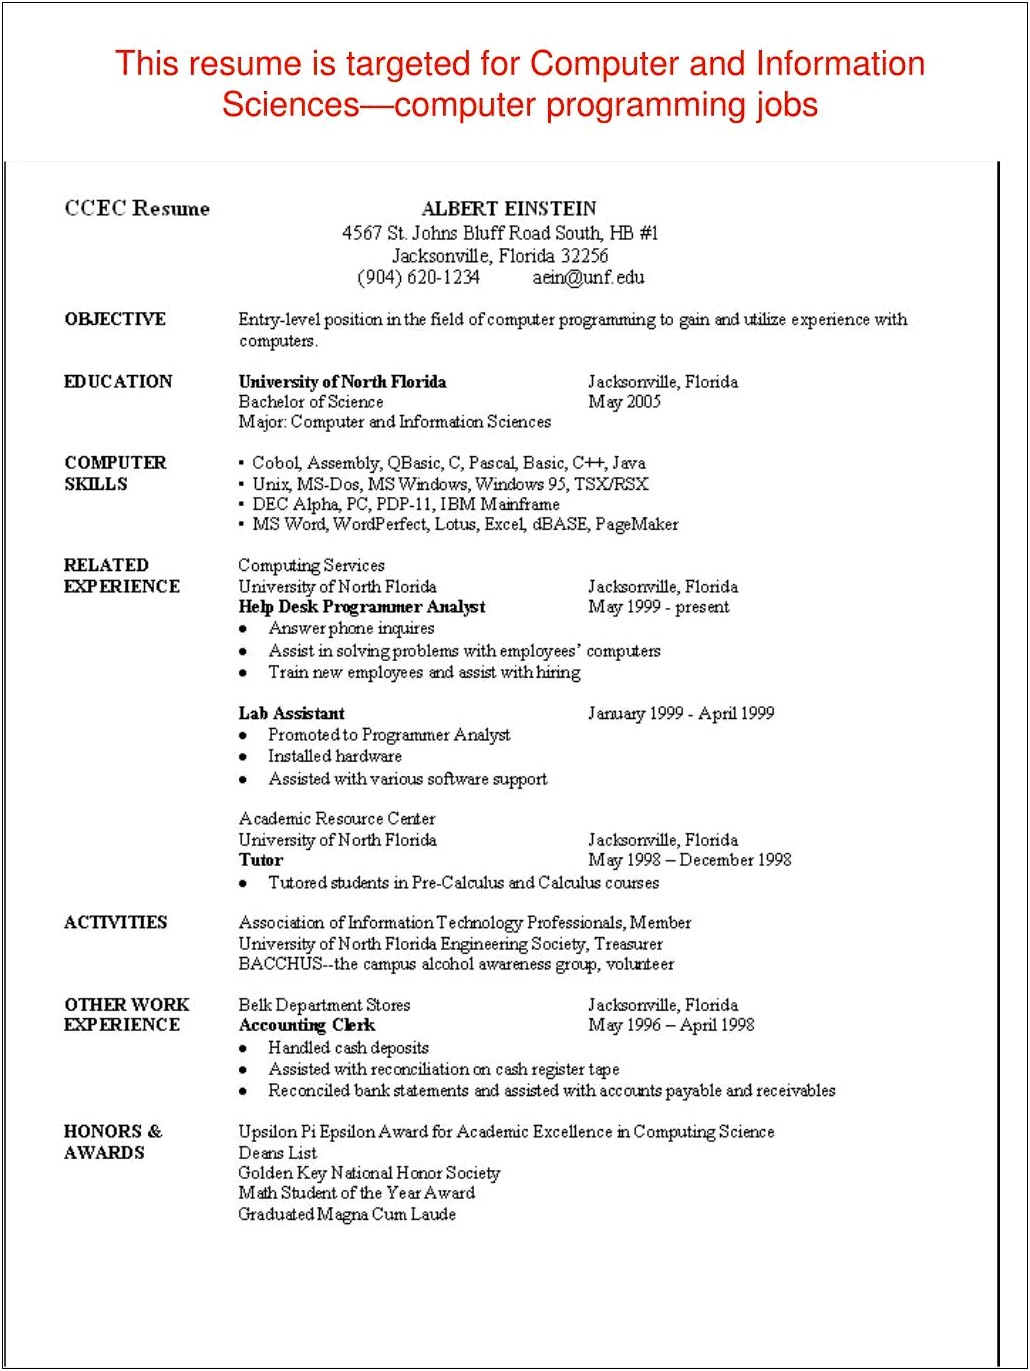 Unf Career Management Center Resume